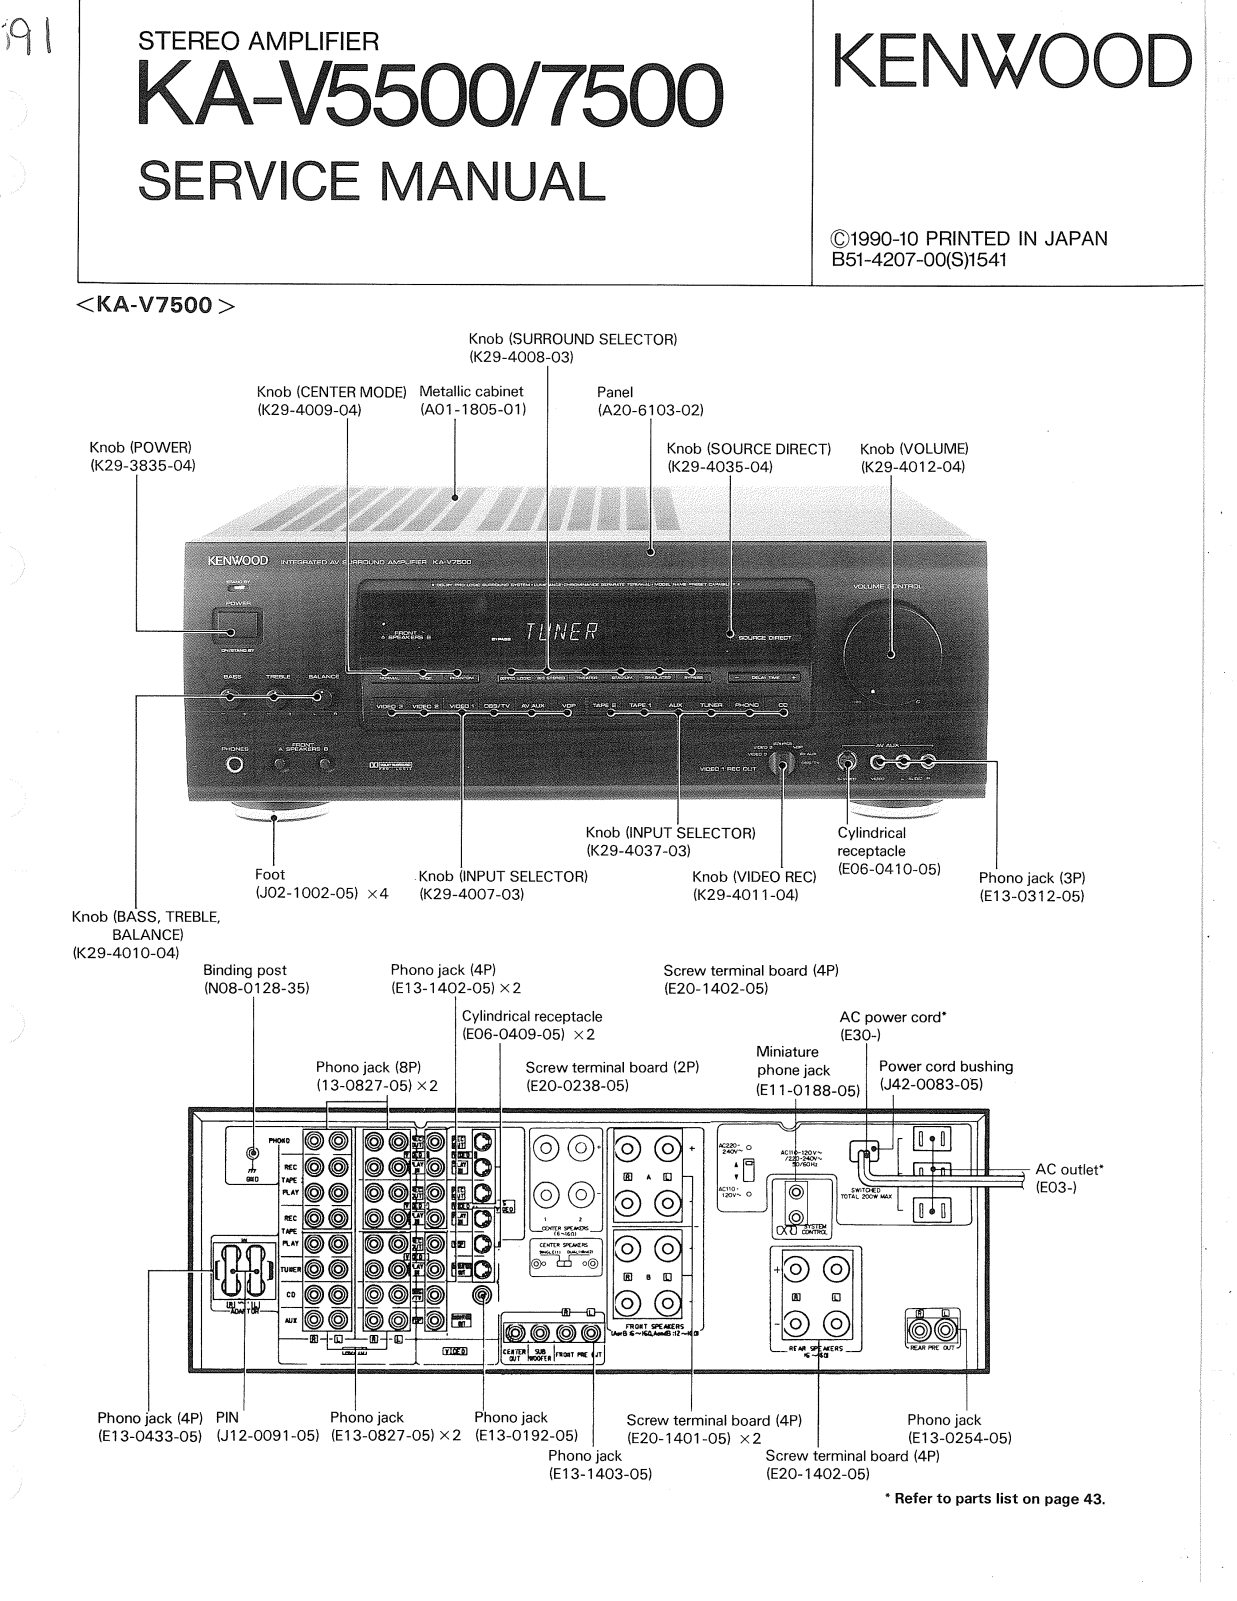 Kenwood KAV-5500, KAV-7500 Service Manual